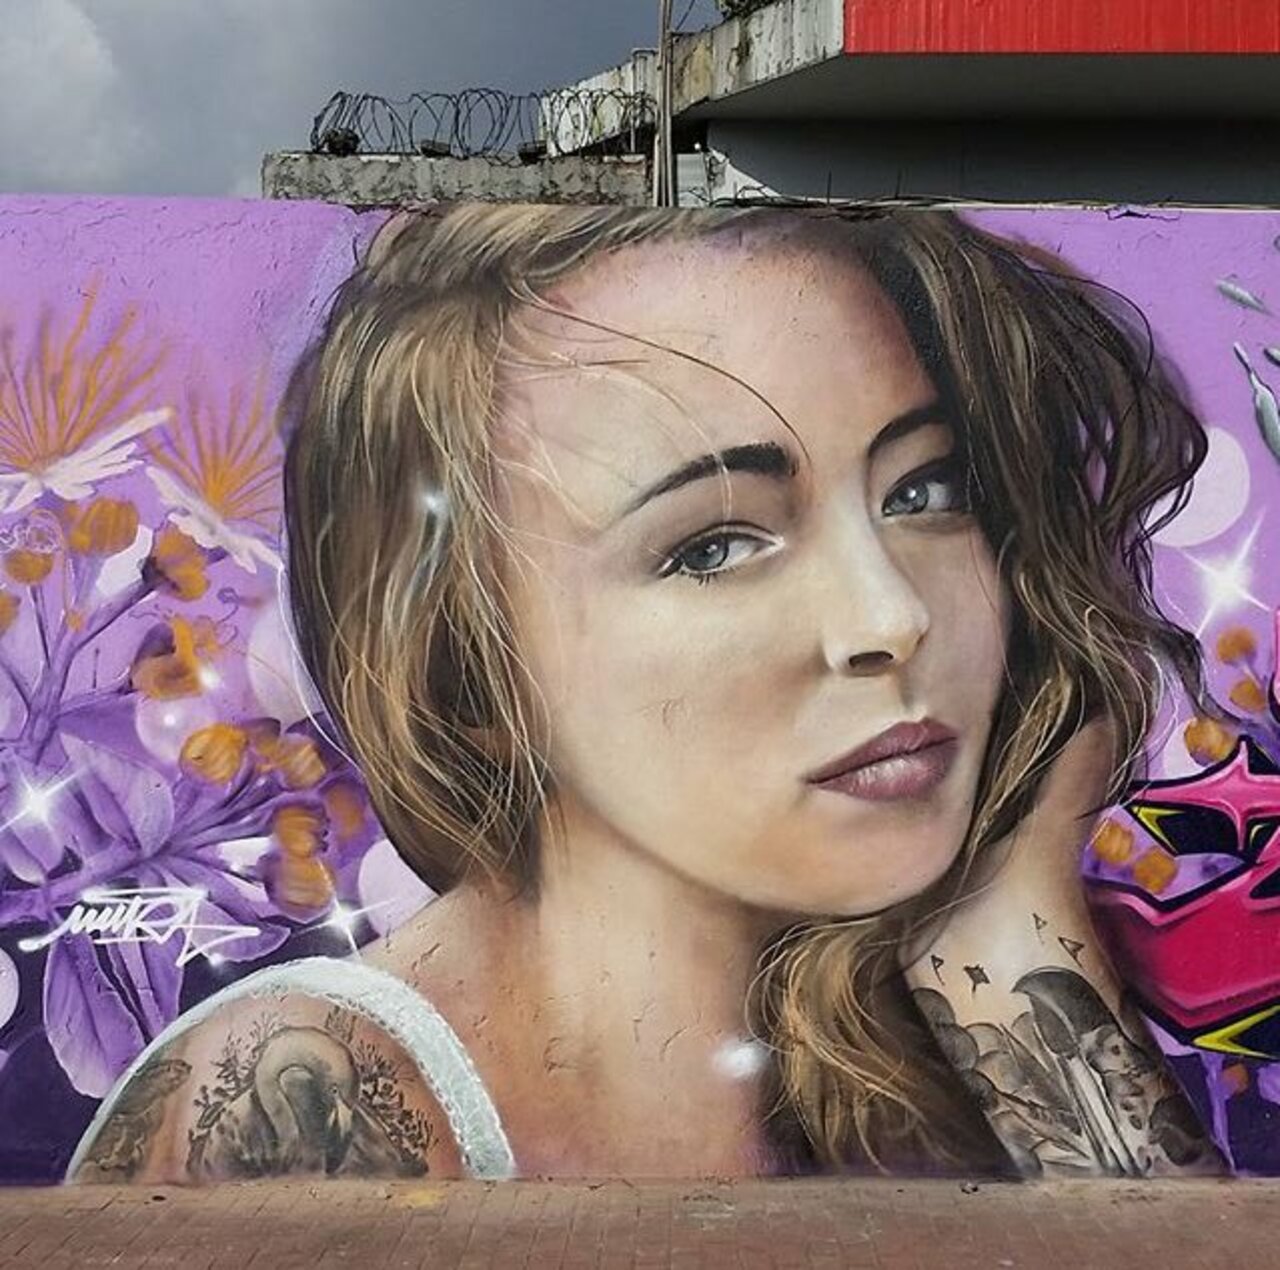 New Street Art by Mantarea 

#art #graffiti #mural #streetart https://t.co/N6g9tRylhY